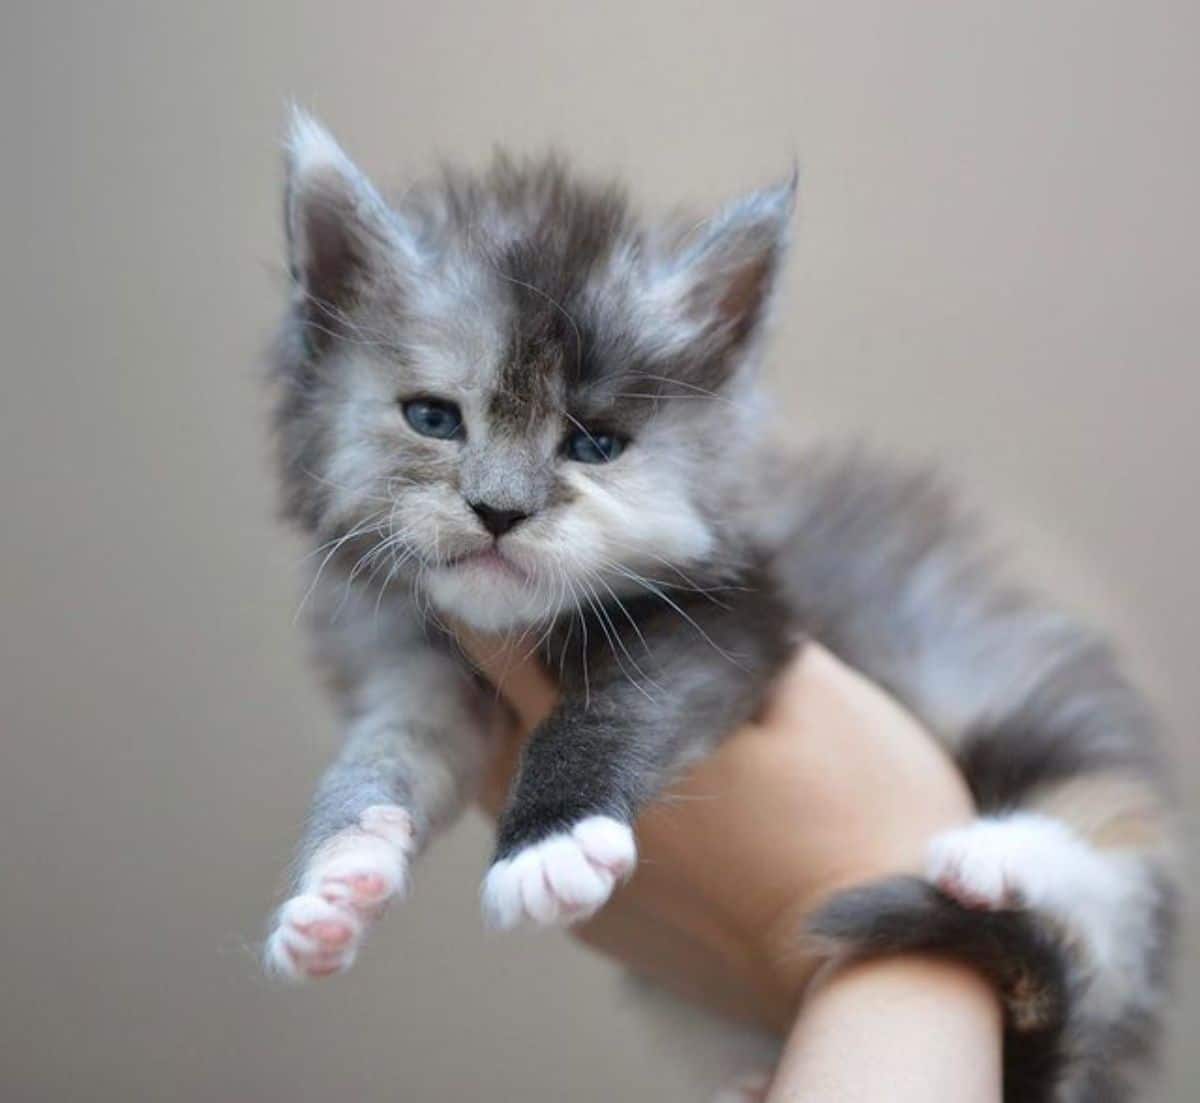 A hand holding a fluffy gray maine coon kitten.